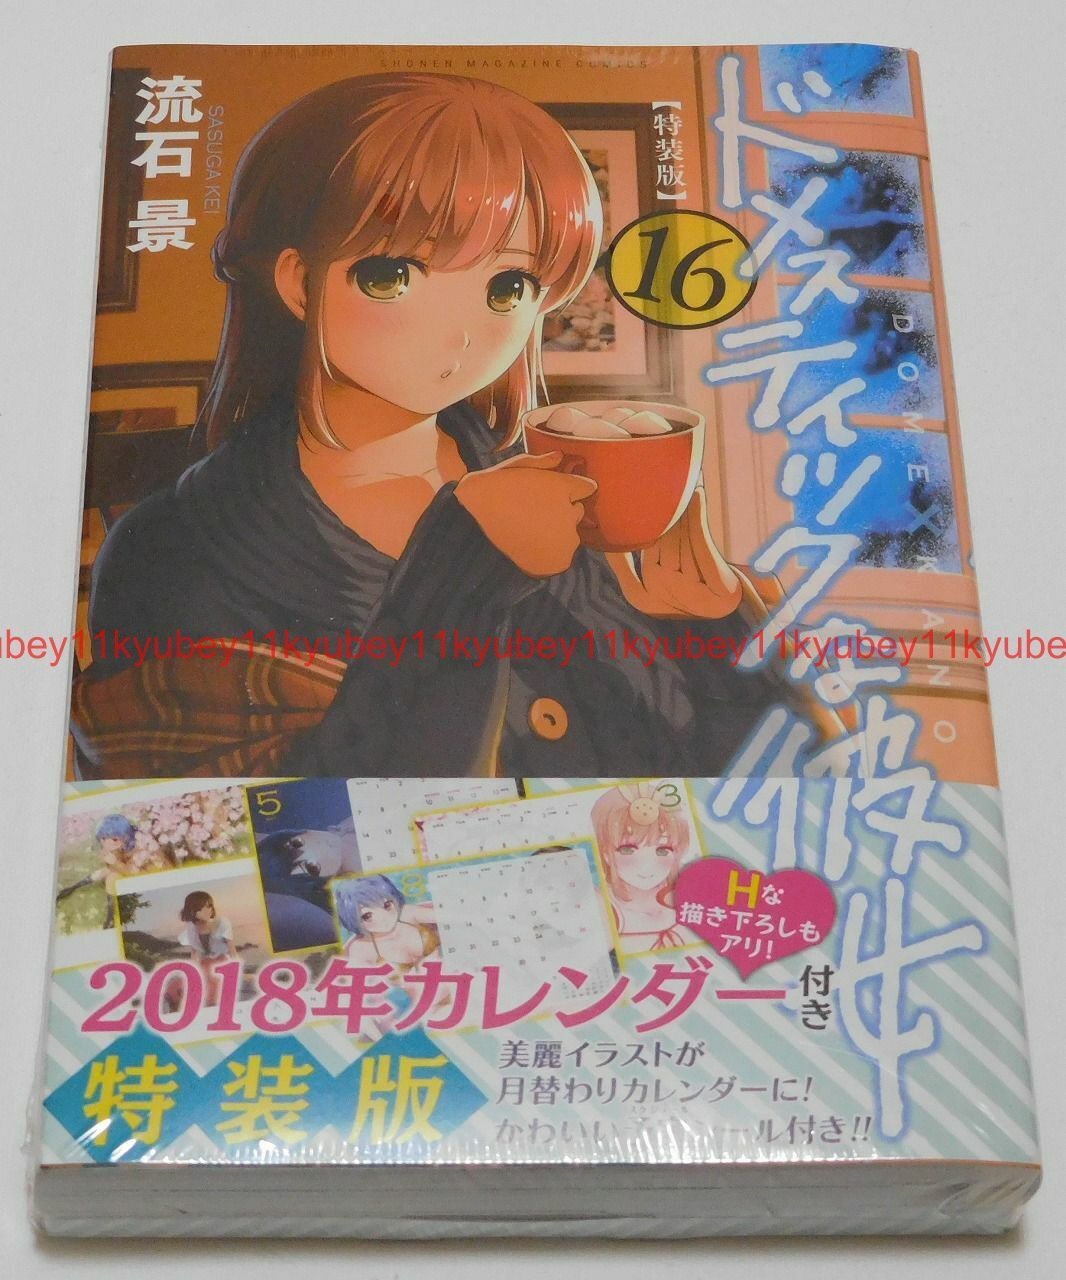 New Domestic Girlfriend na Kanojo Vol.16 Limited Edition Manga + Calendar Japan